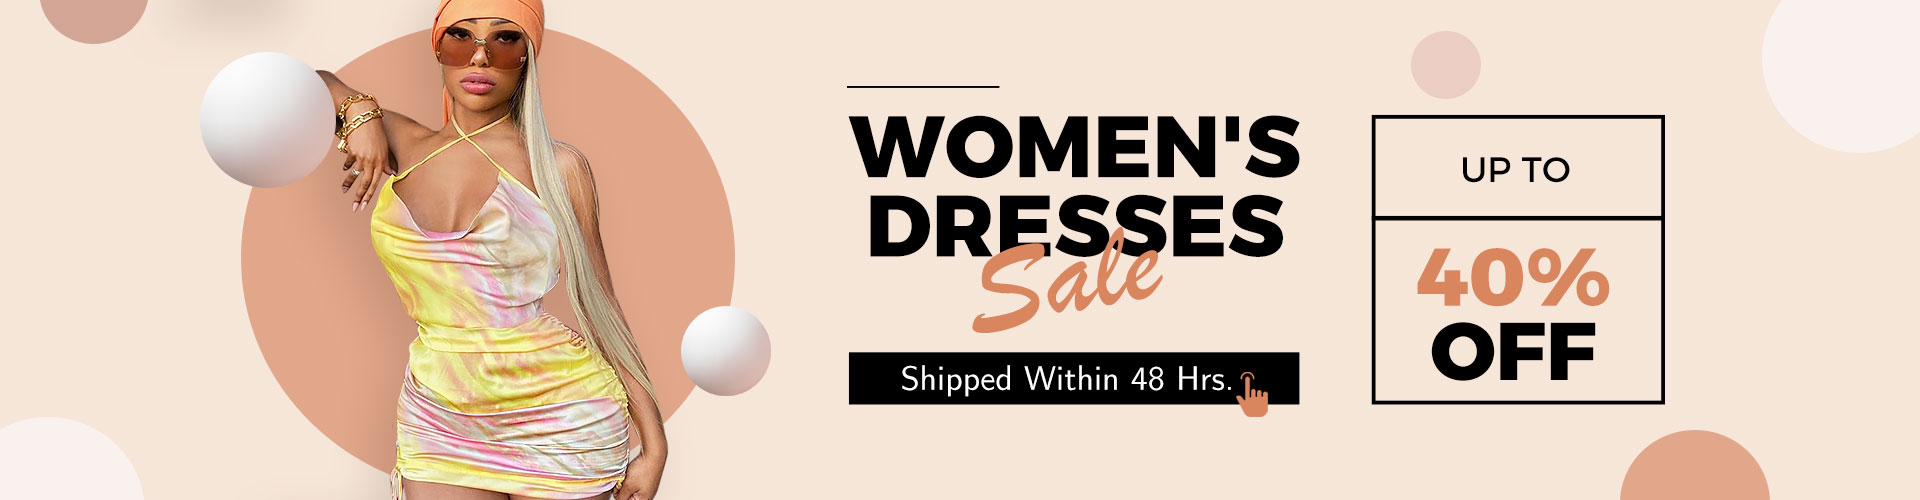 Women's Dresses Sale